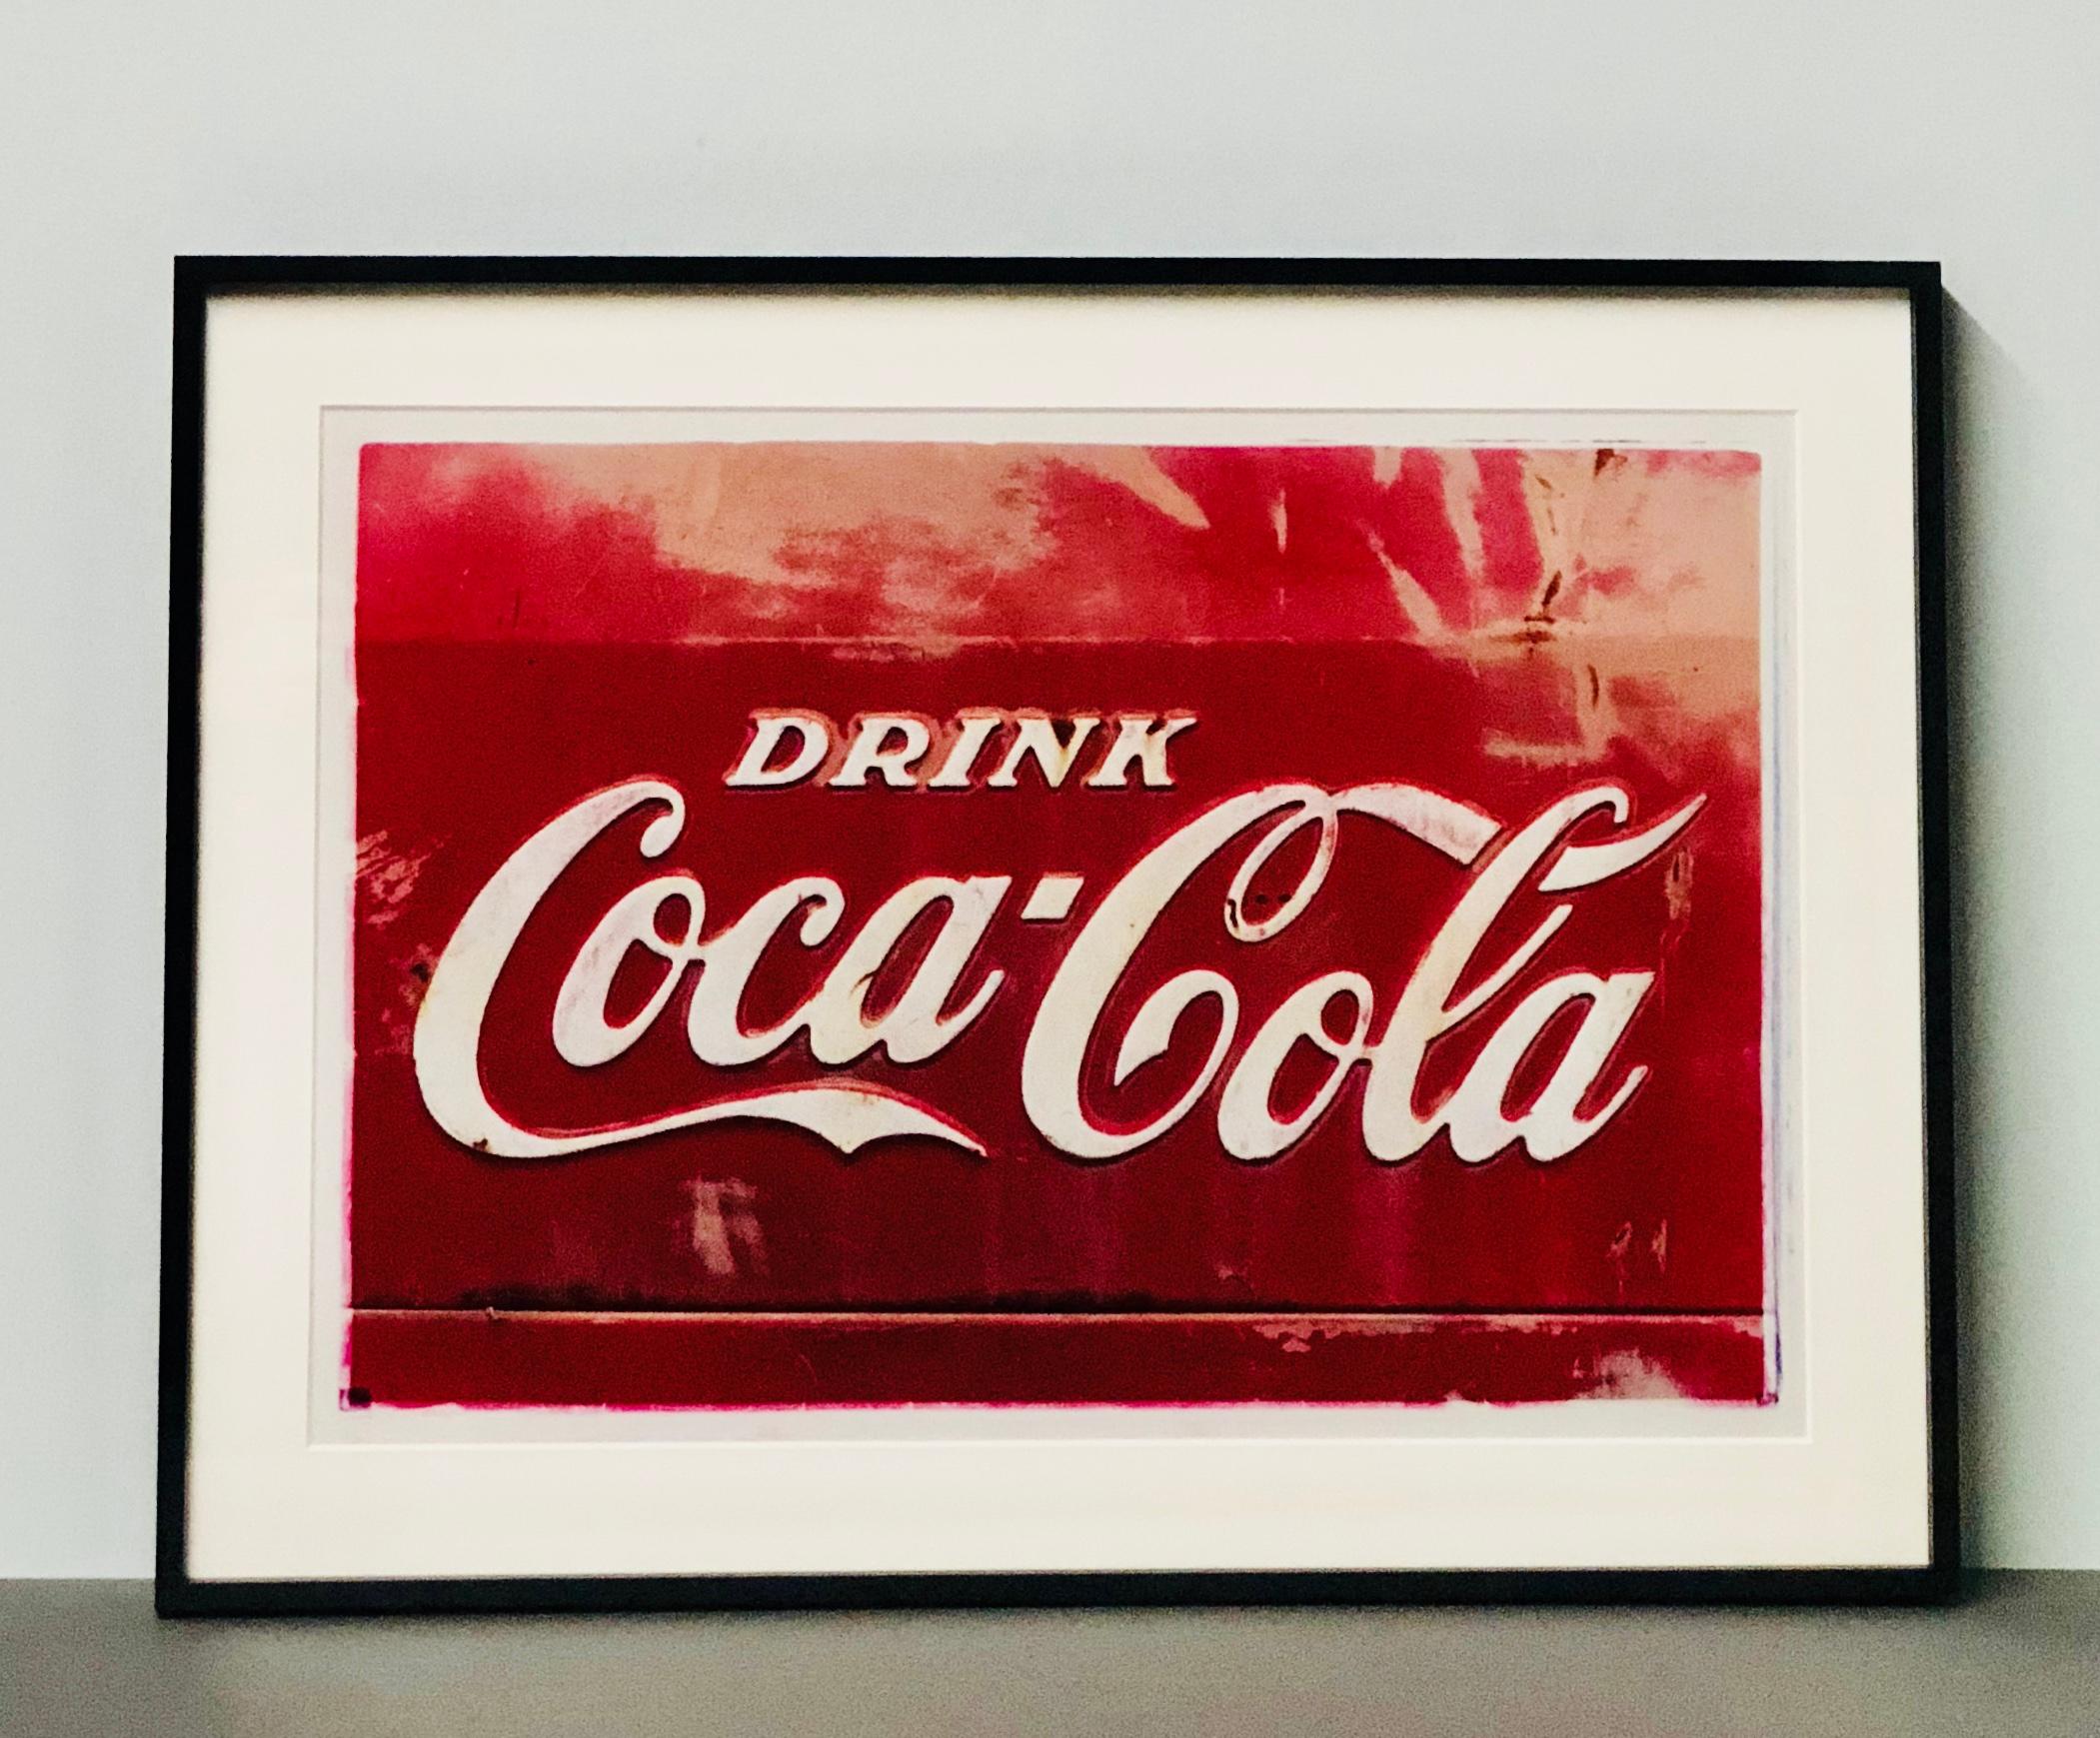 Coca-Cola, Phoenix, Arizona - American pop art color photography - Print by Richard Heeps